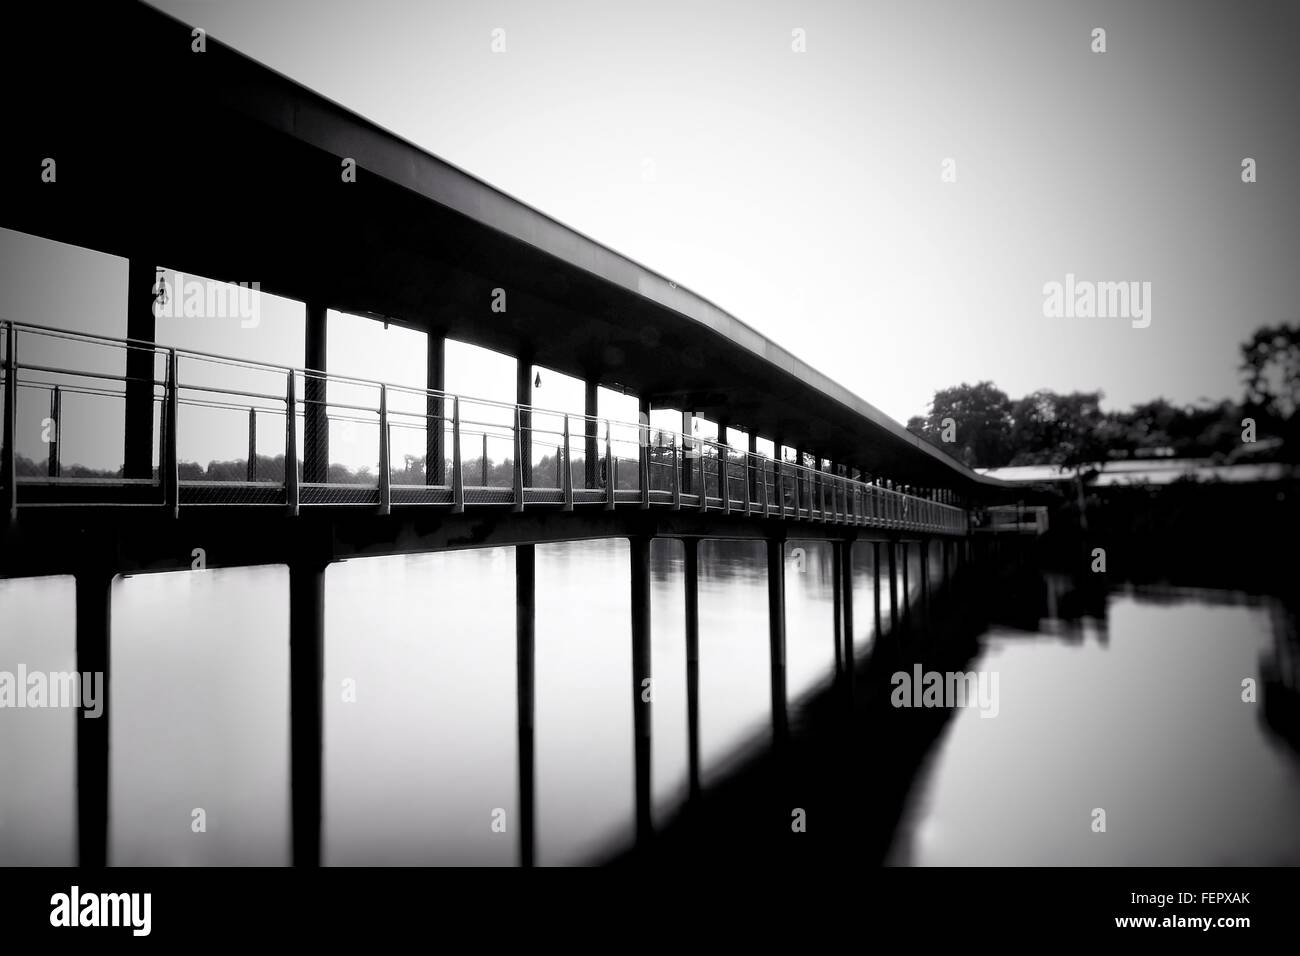 Reflection Of Bridge In Calm Sea Stock Photo